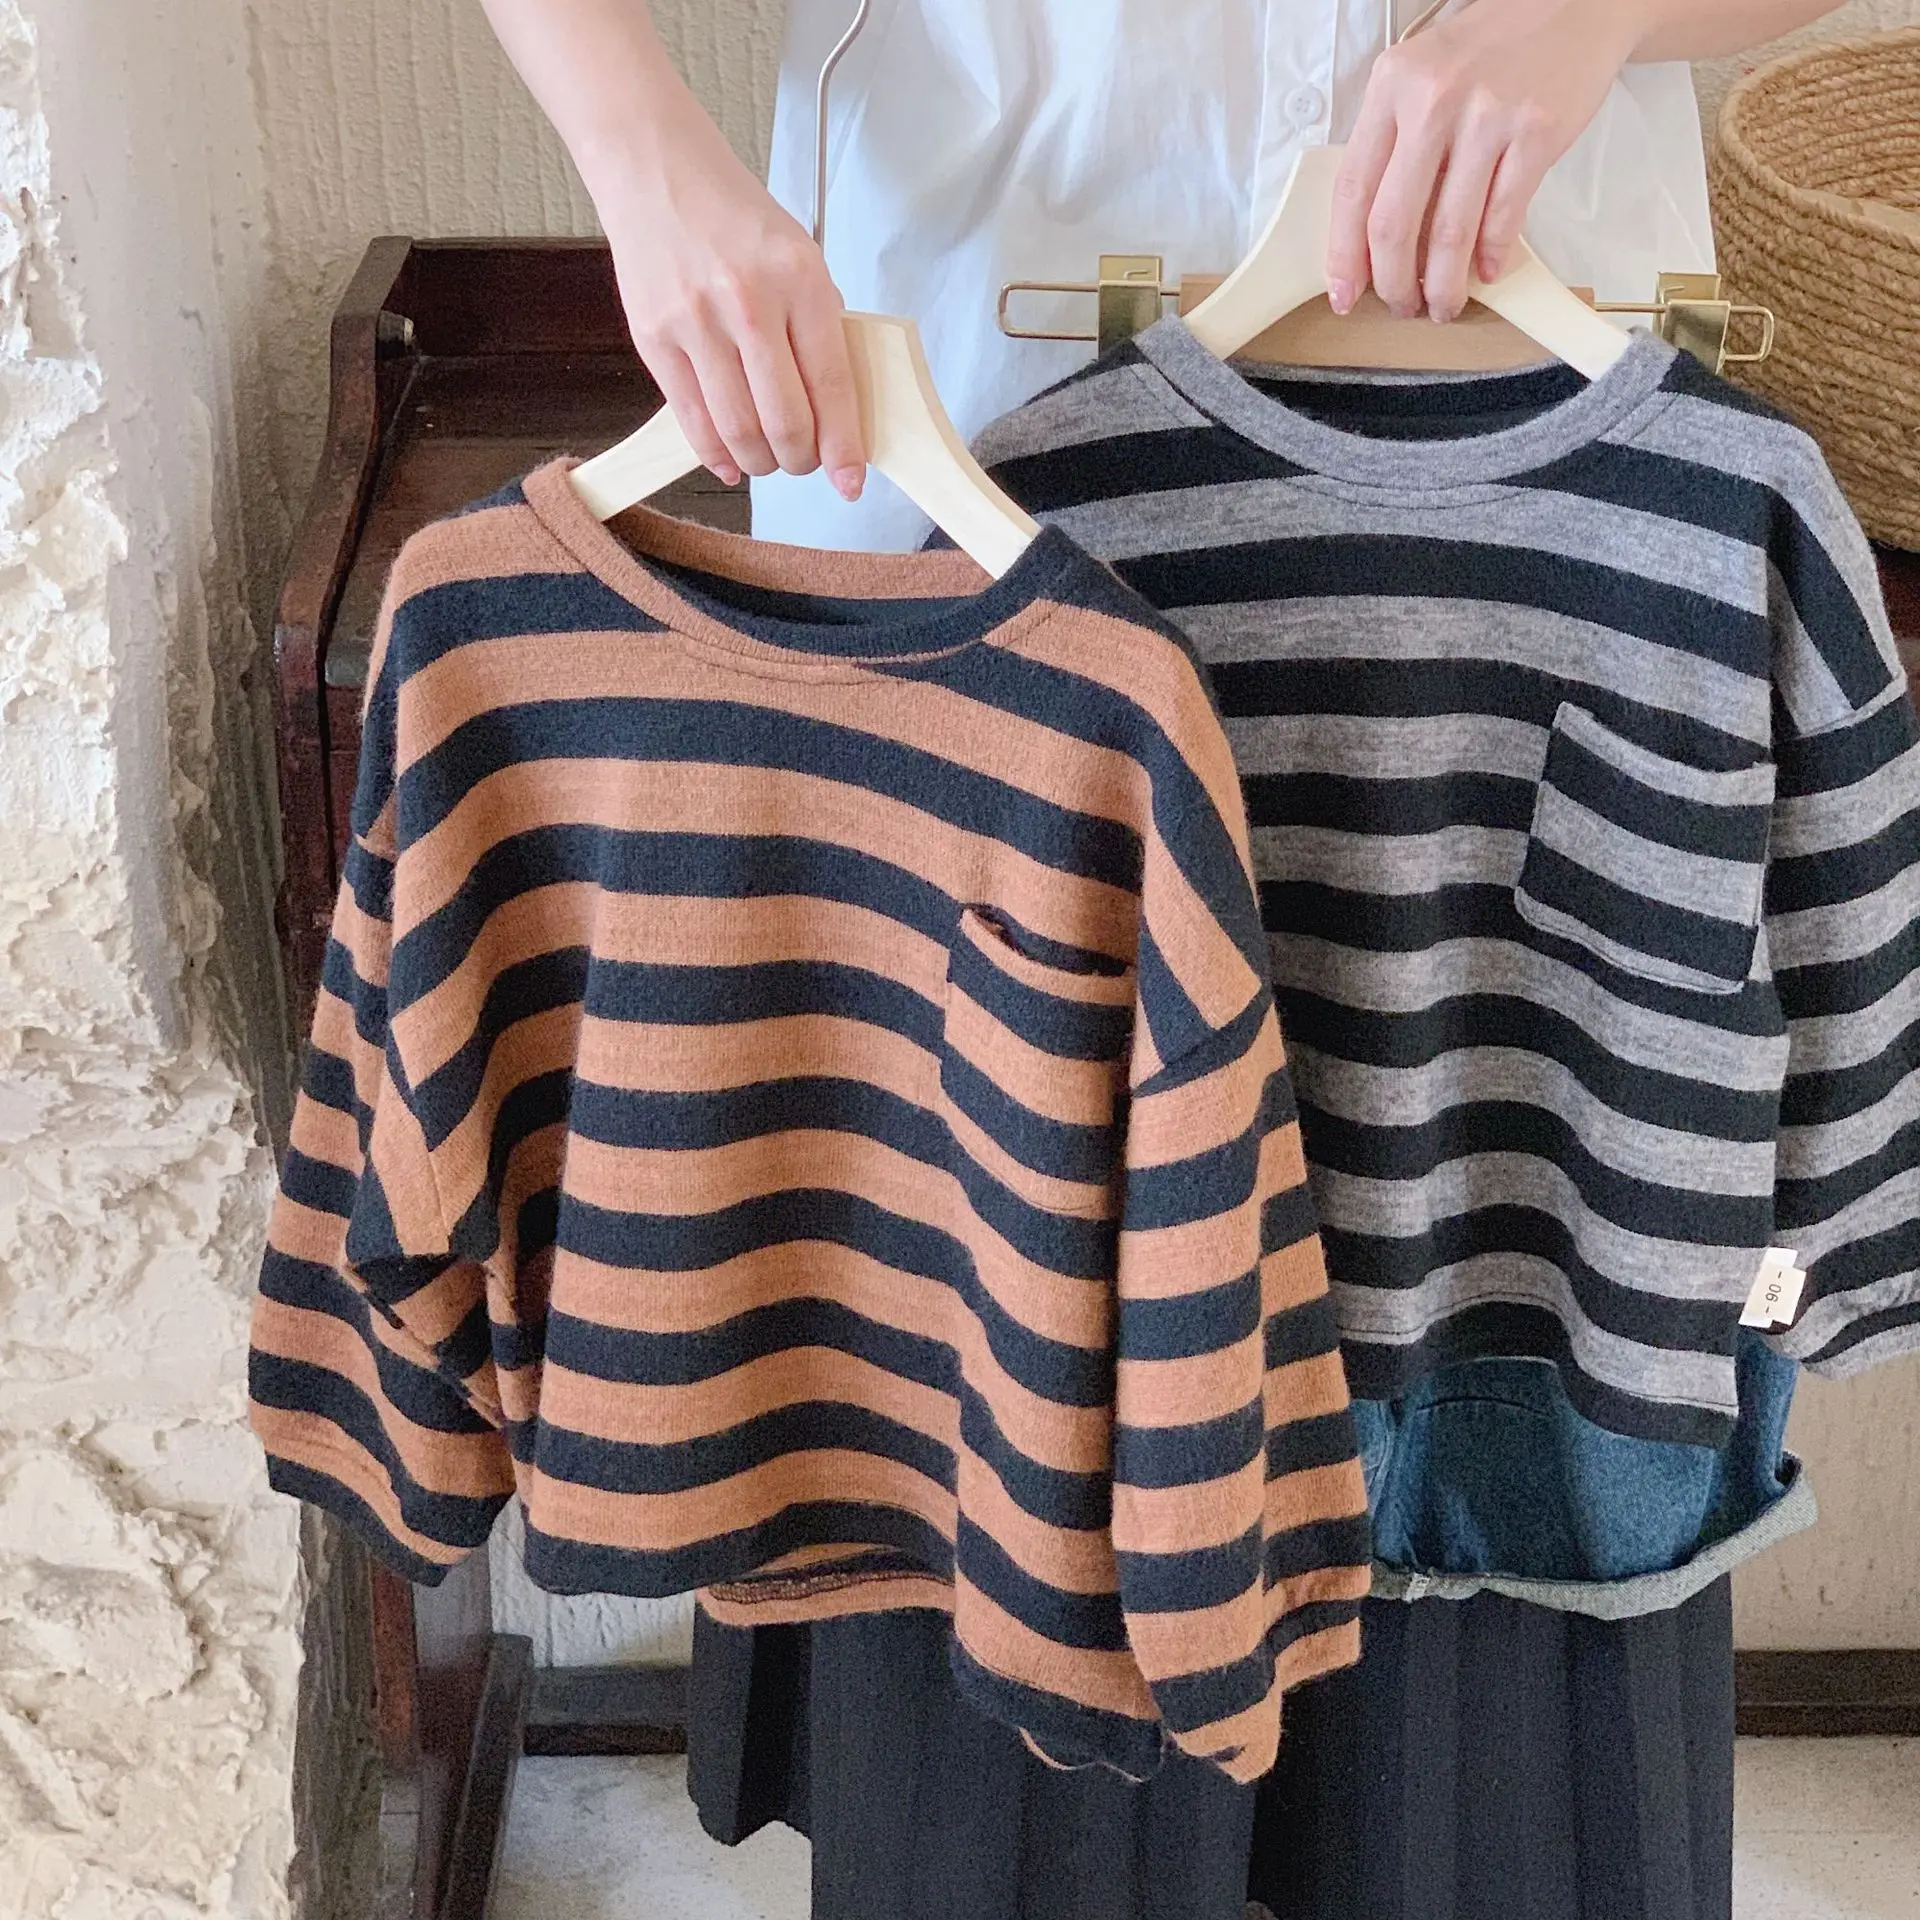 Kids cotton stripe T-shirt  Cotton Long Sleeve T-shirt girls spring autumn gray brown tees